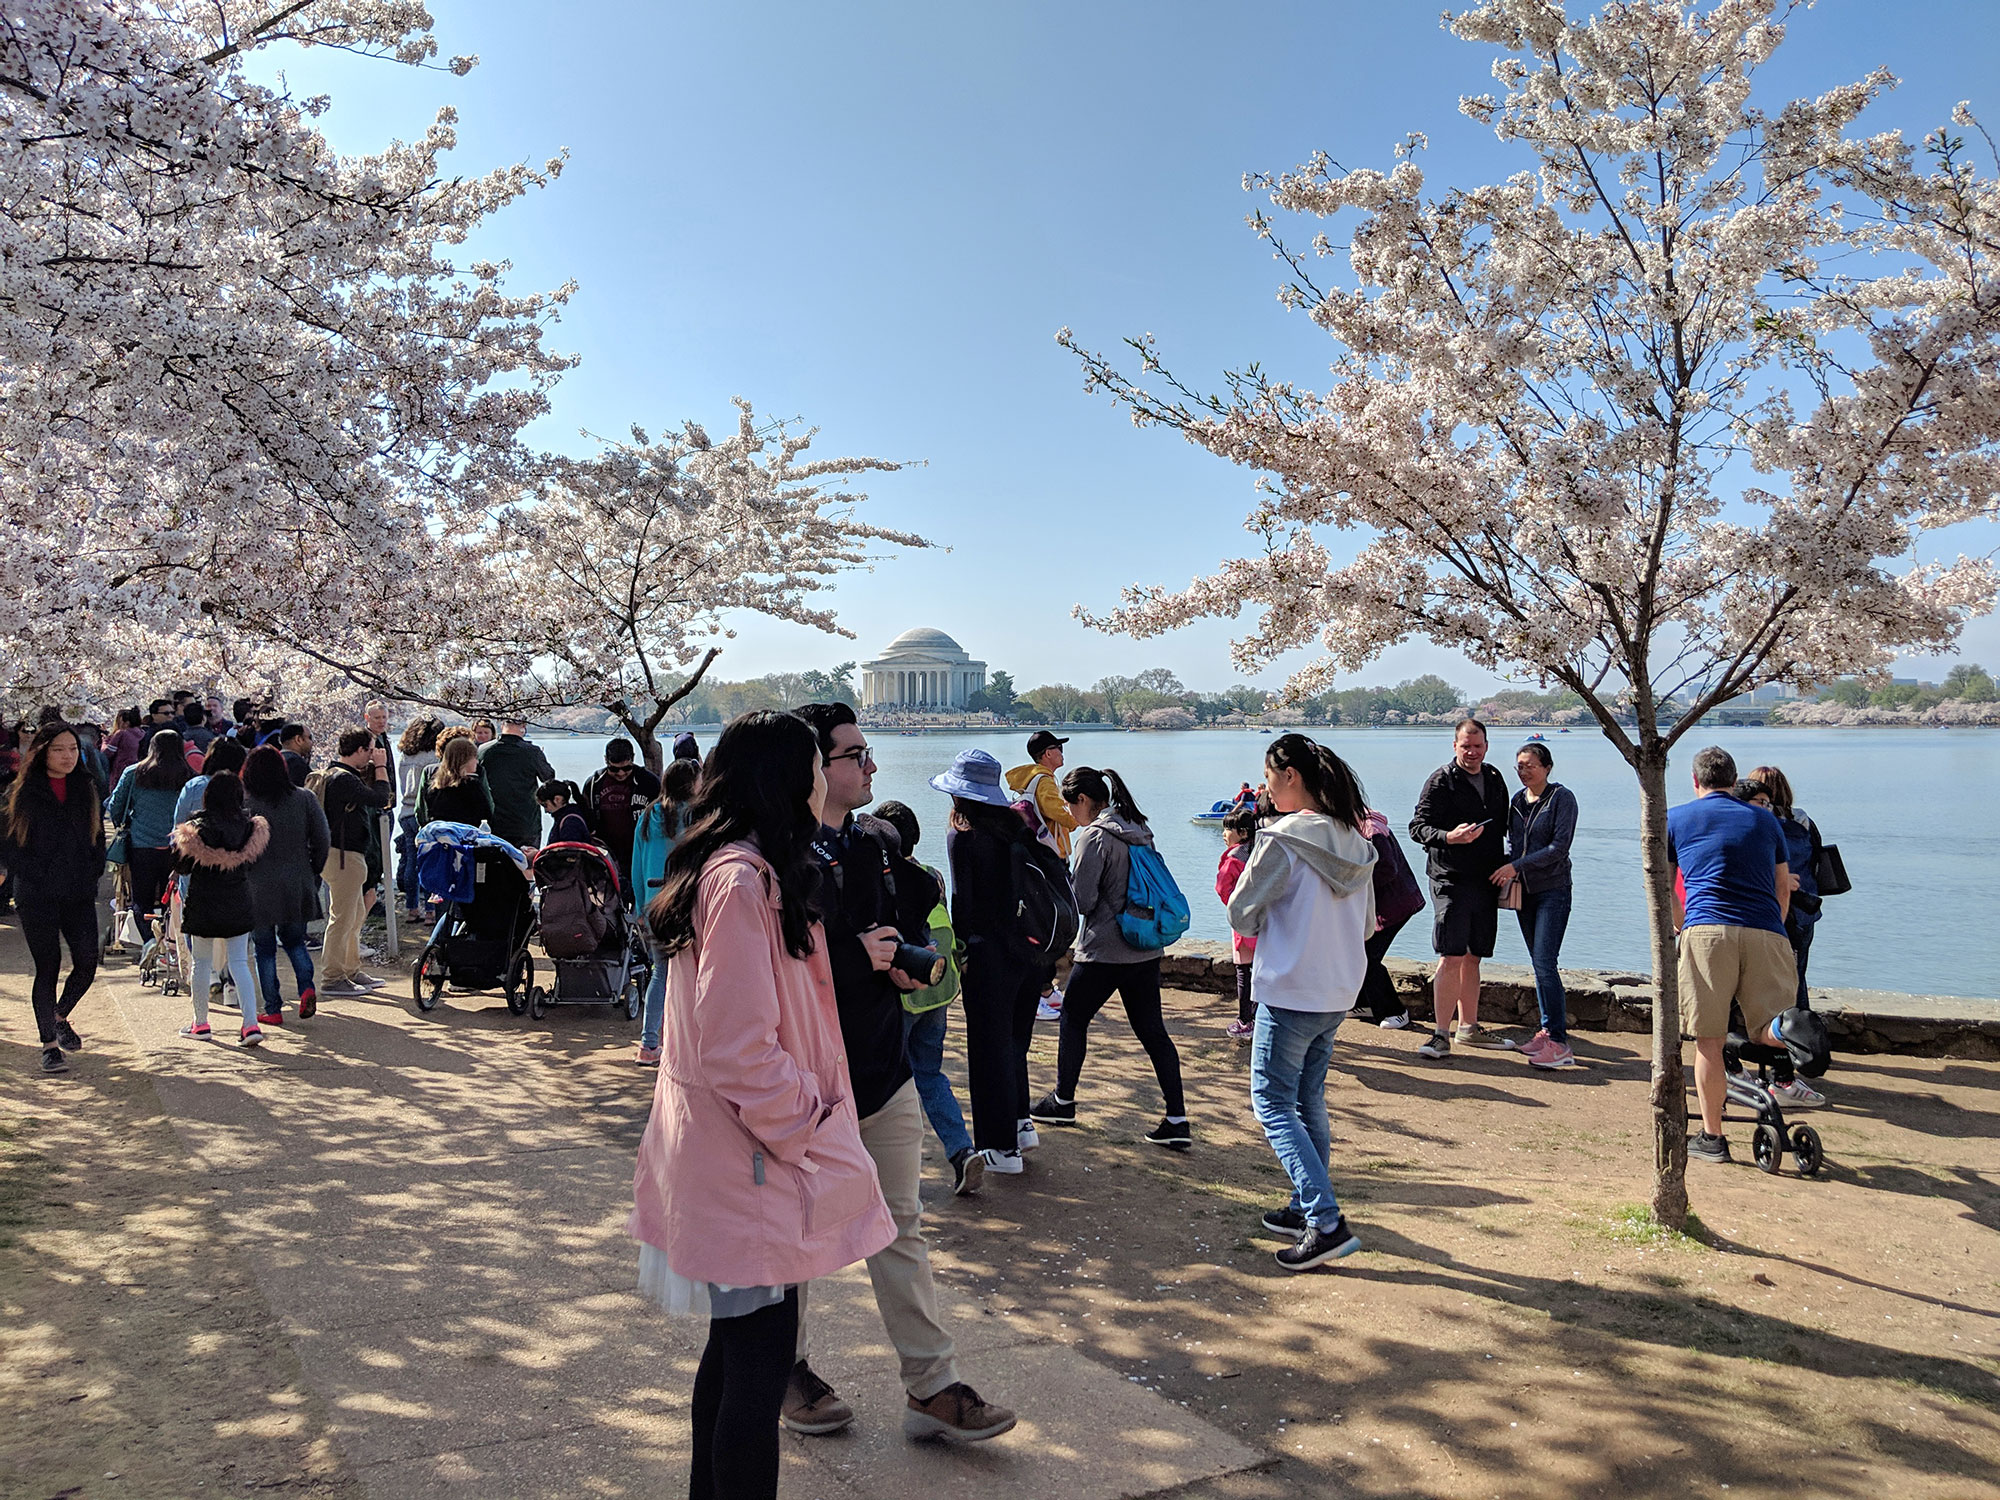 Tourists at the Washington D.C. cherry blossoms.